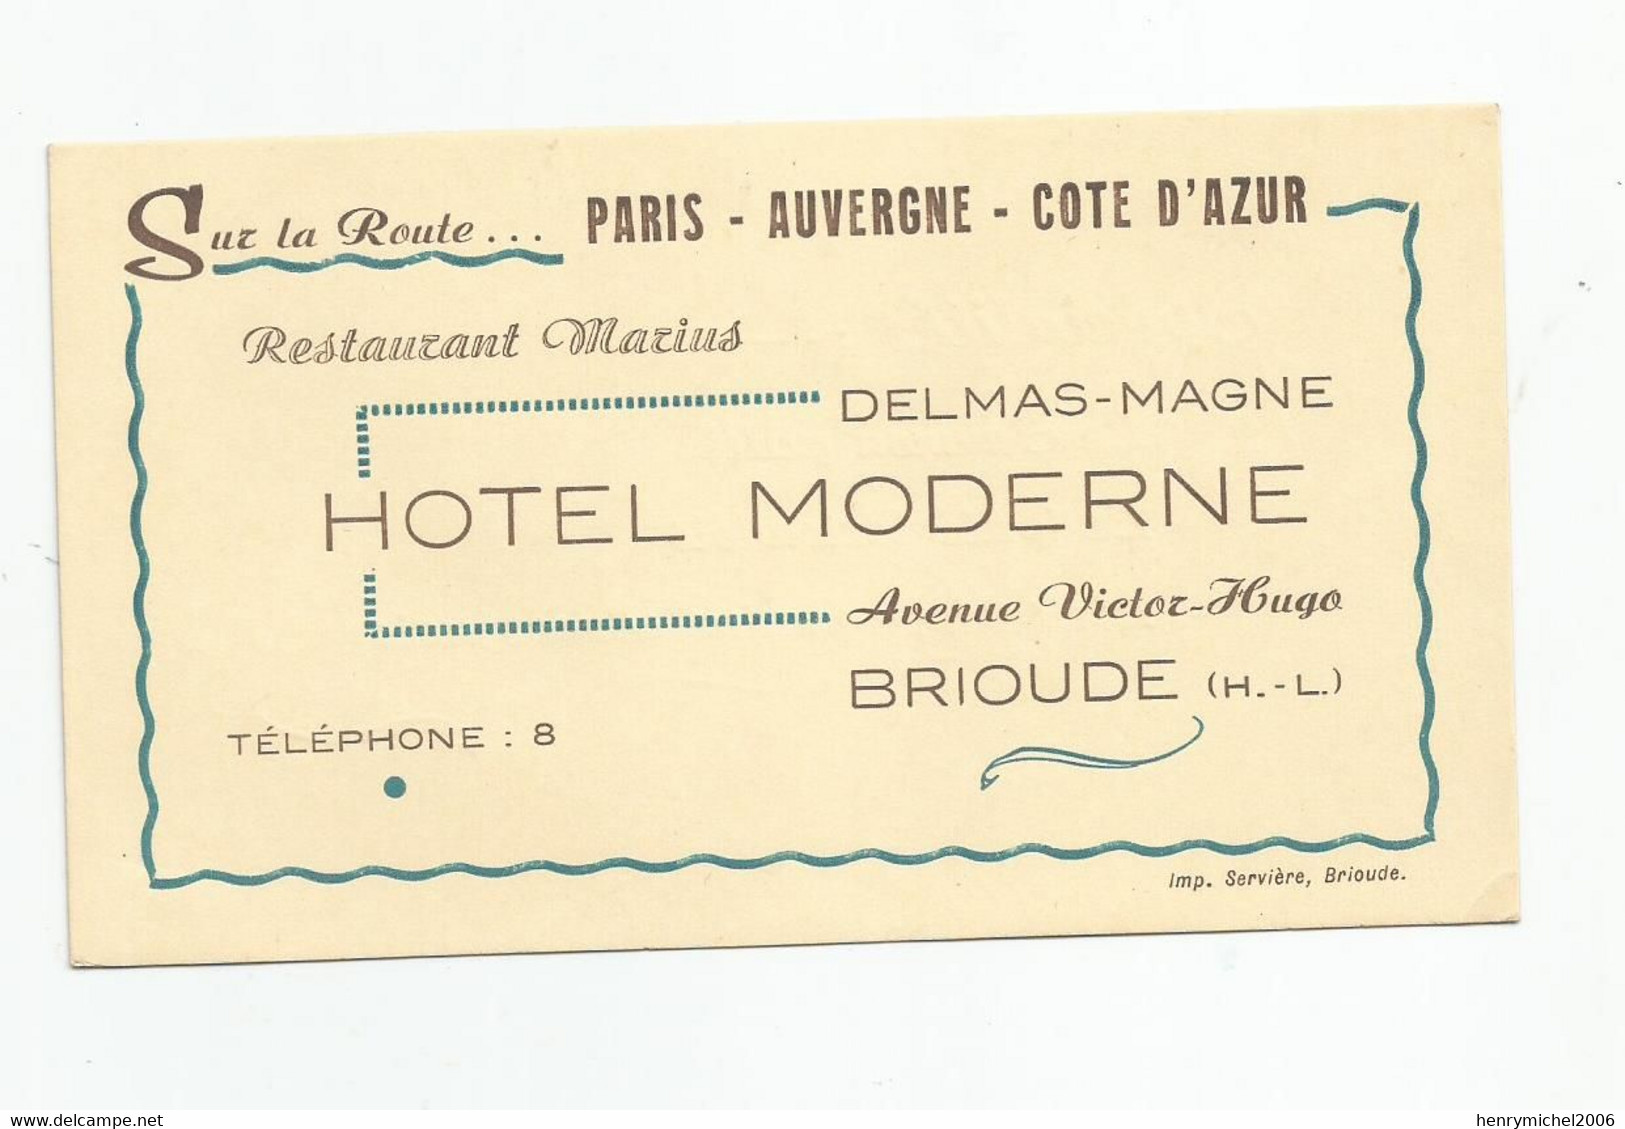 Carte De Visite Brioude Hotel Moderne Delmas Magne Restaurant Marius Avenue Victor Hugo Cdv 14 X8 Cm ( 43 Haute Loire ) - Visitenkarten